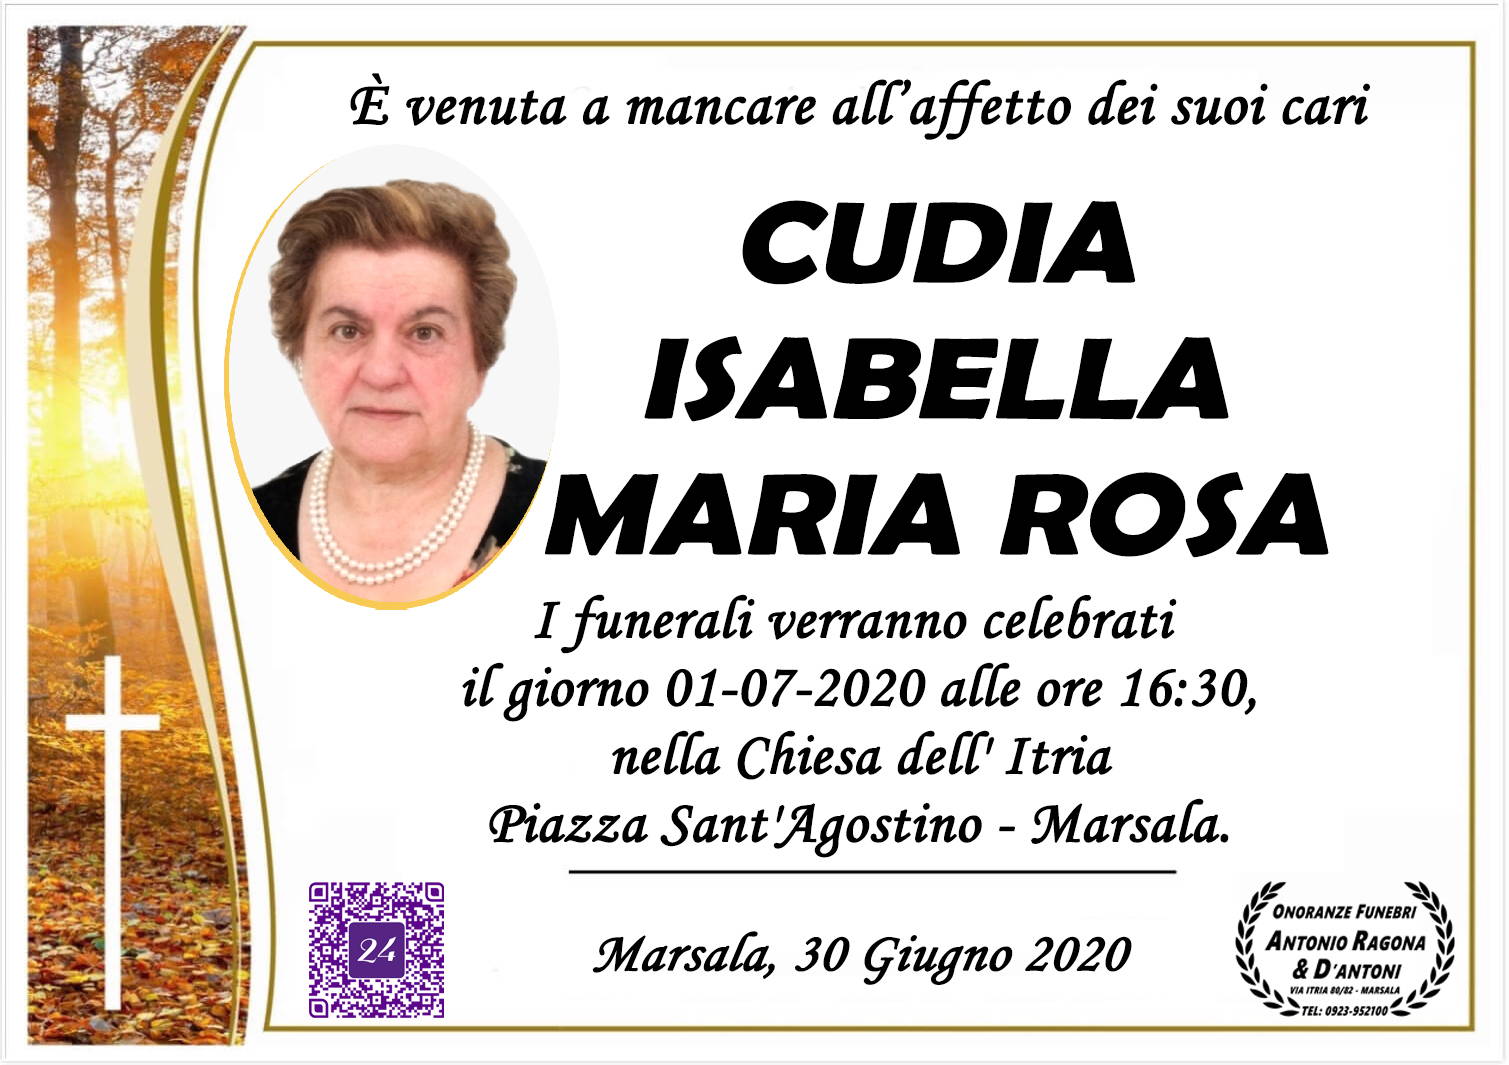 Isabella Maria Rosa Cudia